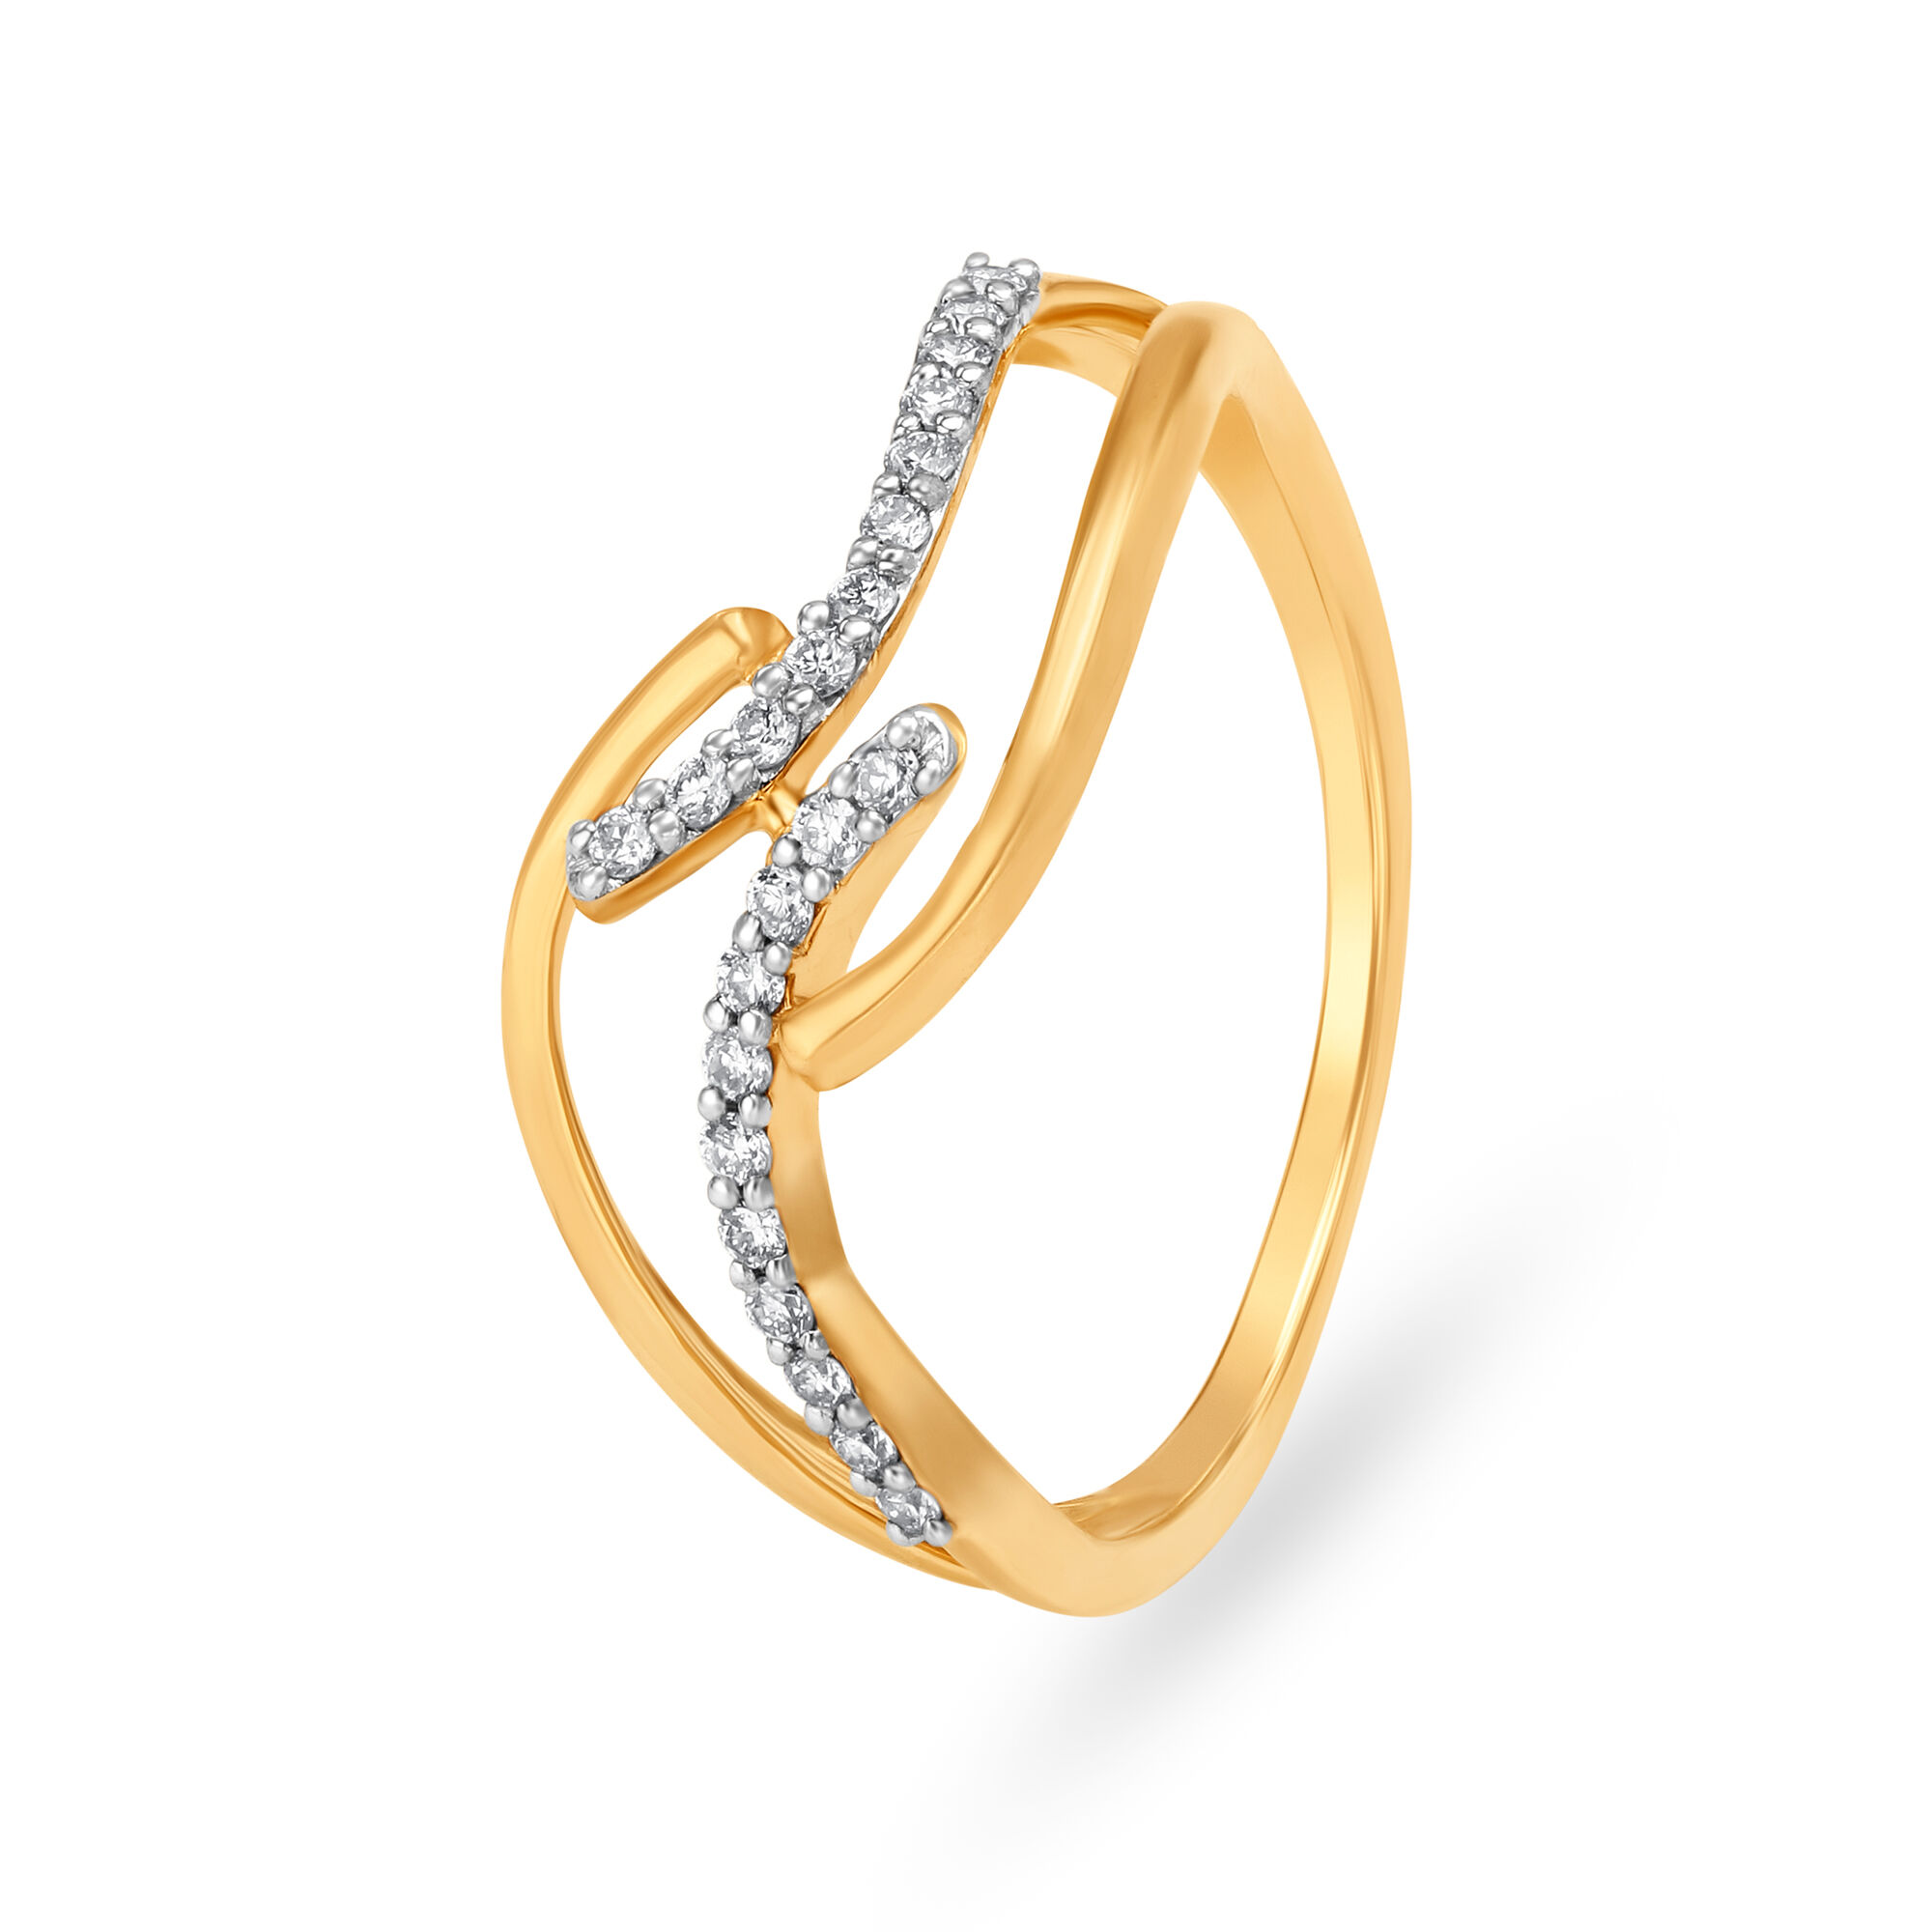 आलिया से लेकर दीपिका का स्टाइल भी होगा फिका, जब इन Stylish Gold Ring Design  को पहनकर आएंगी आप नजर | stylish gold ring designs for making a bold  statement | HerZindagi